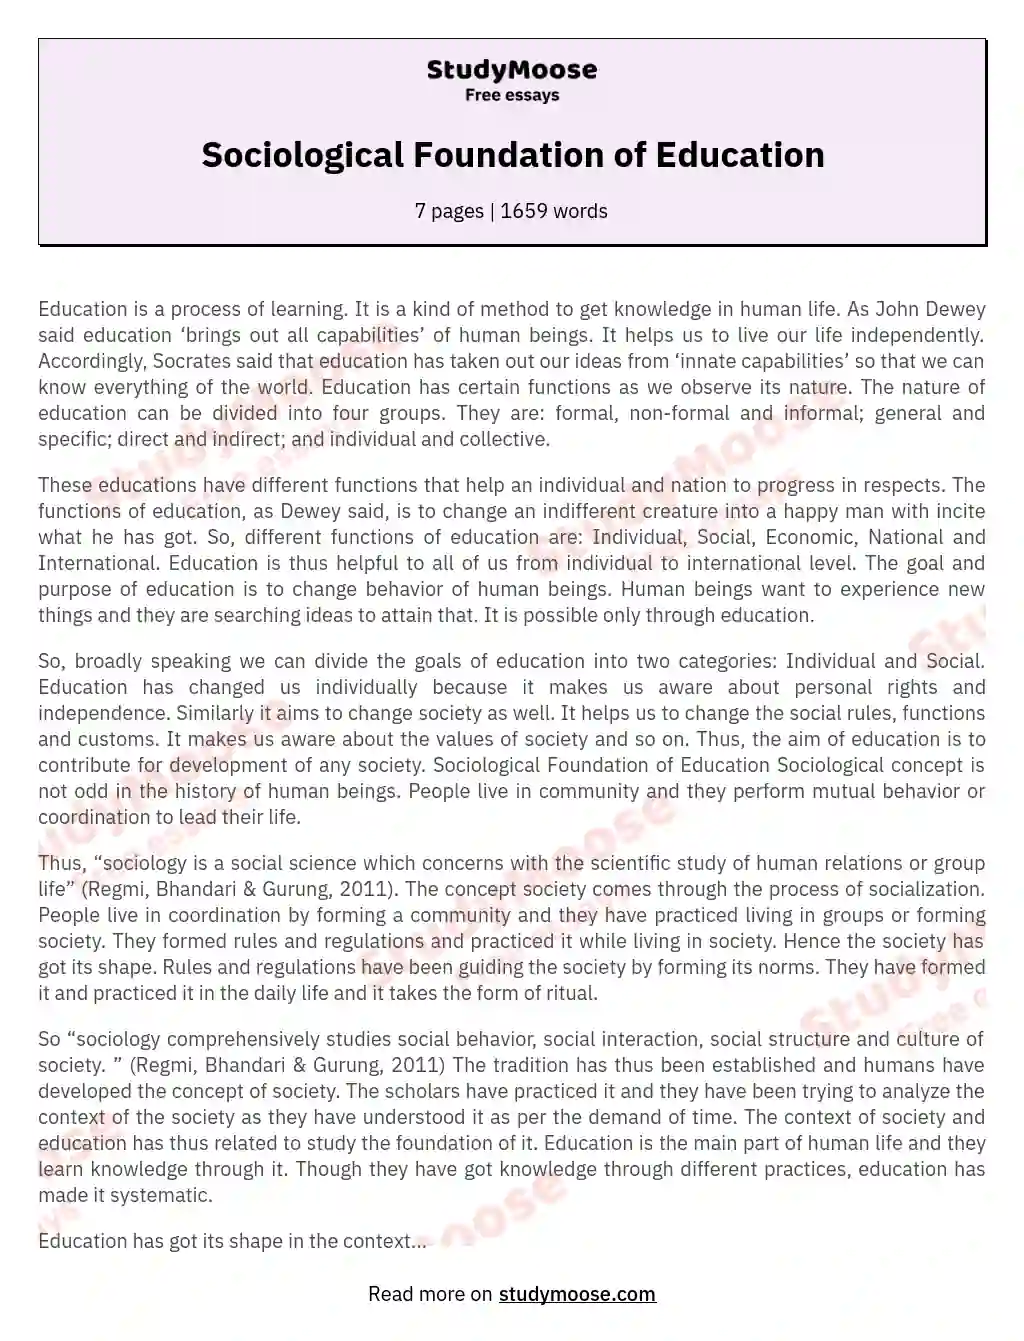 Sociological Foundation of Education essay